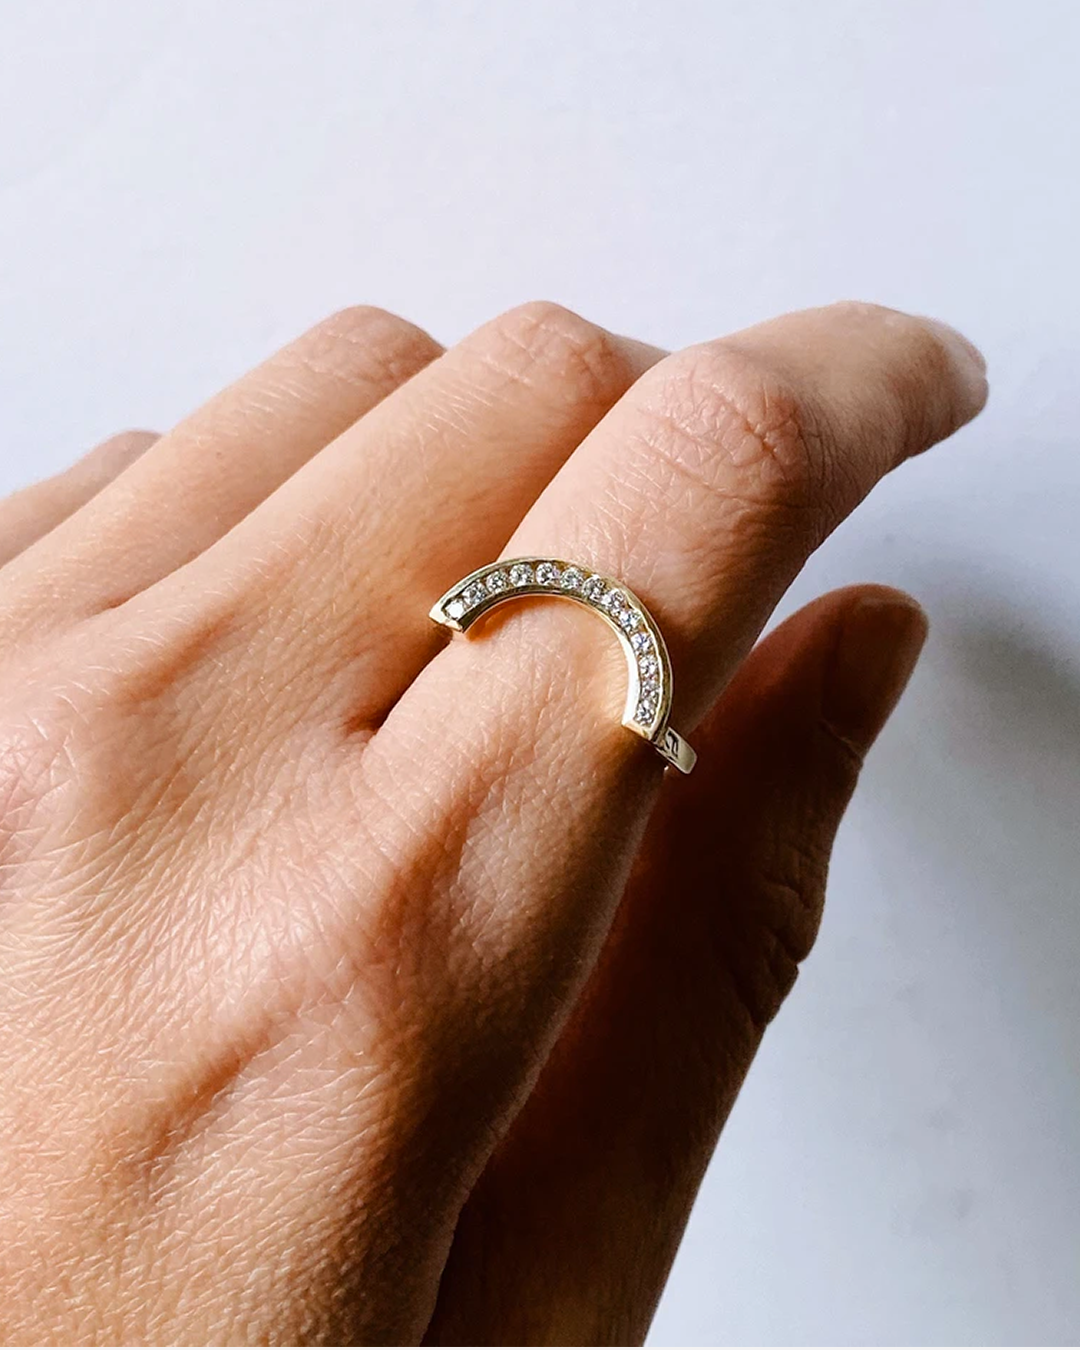 Petite Rainbow / White Diamond Ring By Casual Seance